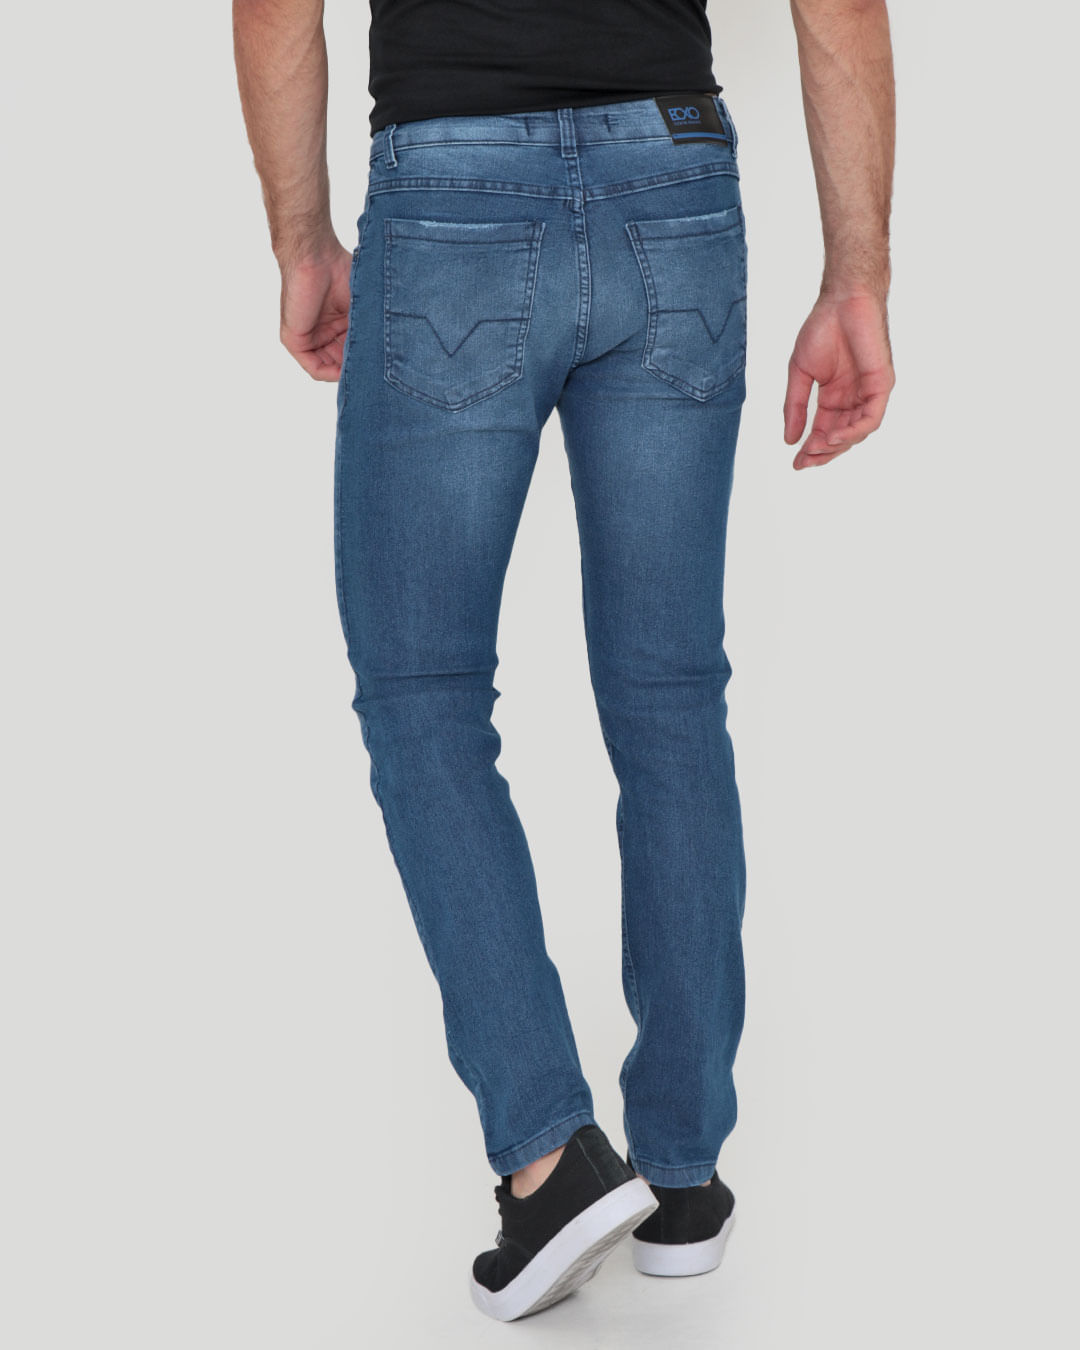 23121000990045-blue-jeans-medio-3